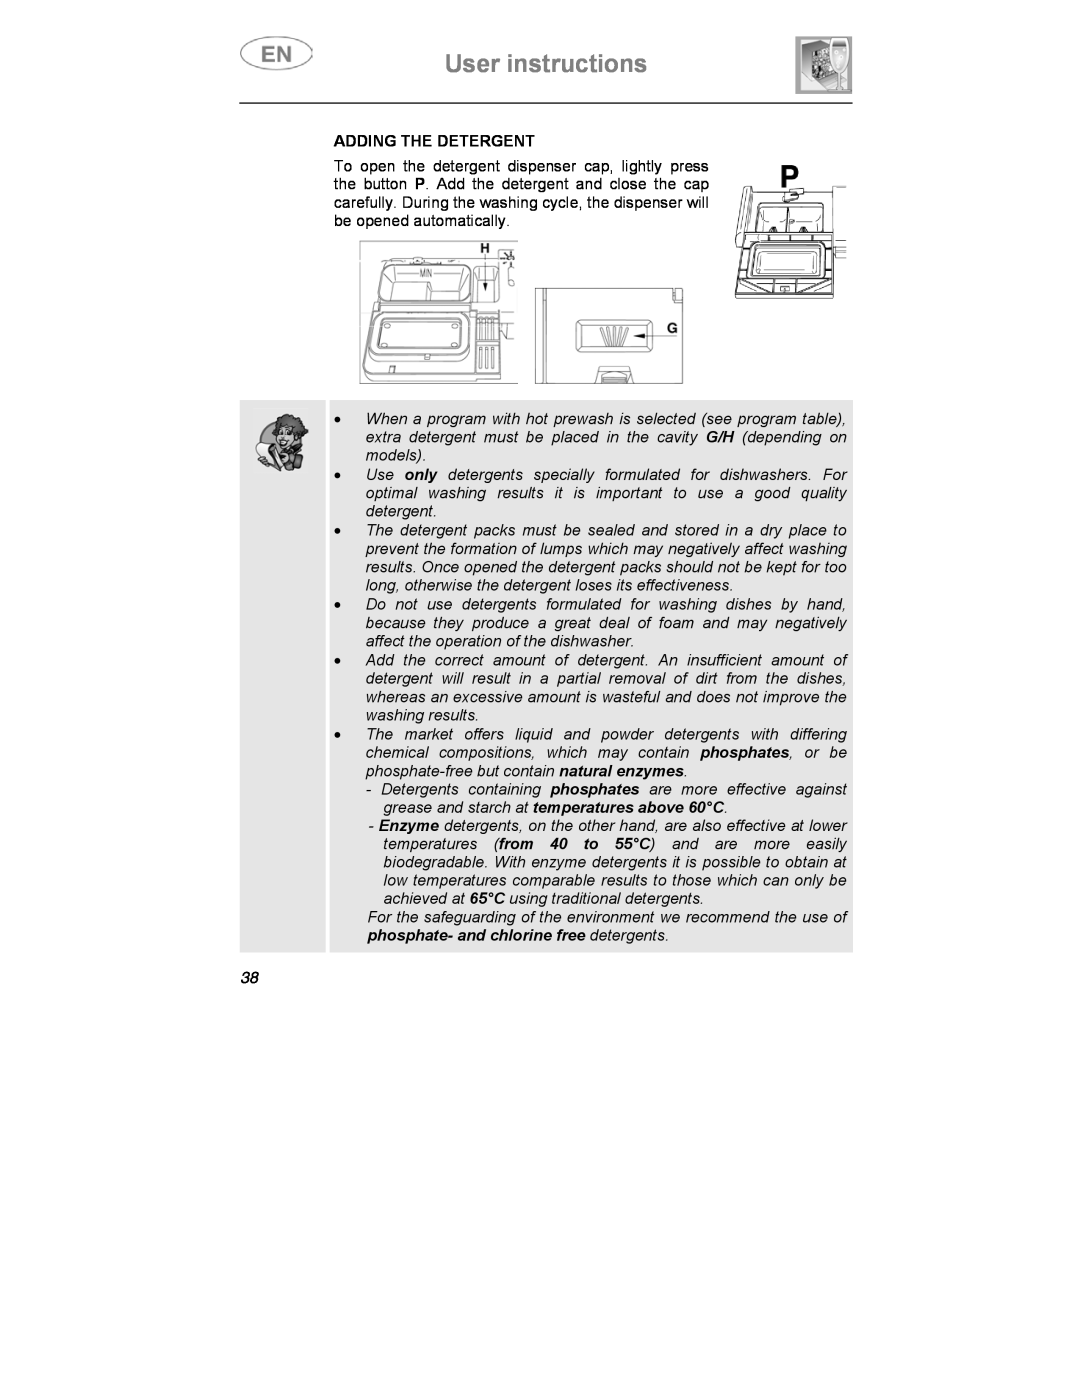 Smeg CA01-3 instruction manual User instructions, Adding The Detergent 